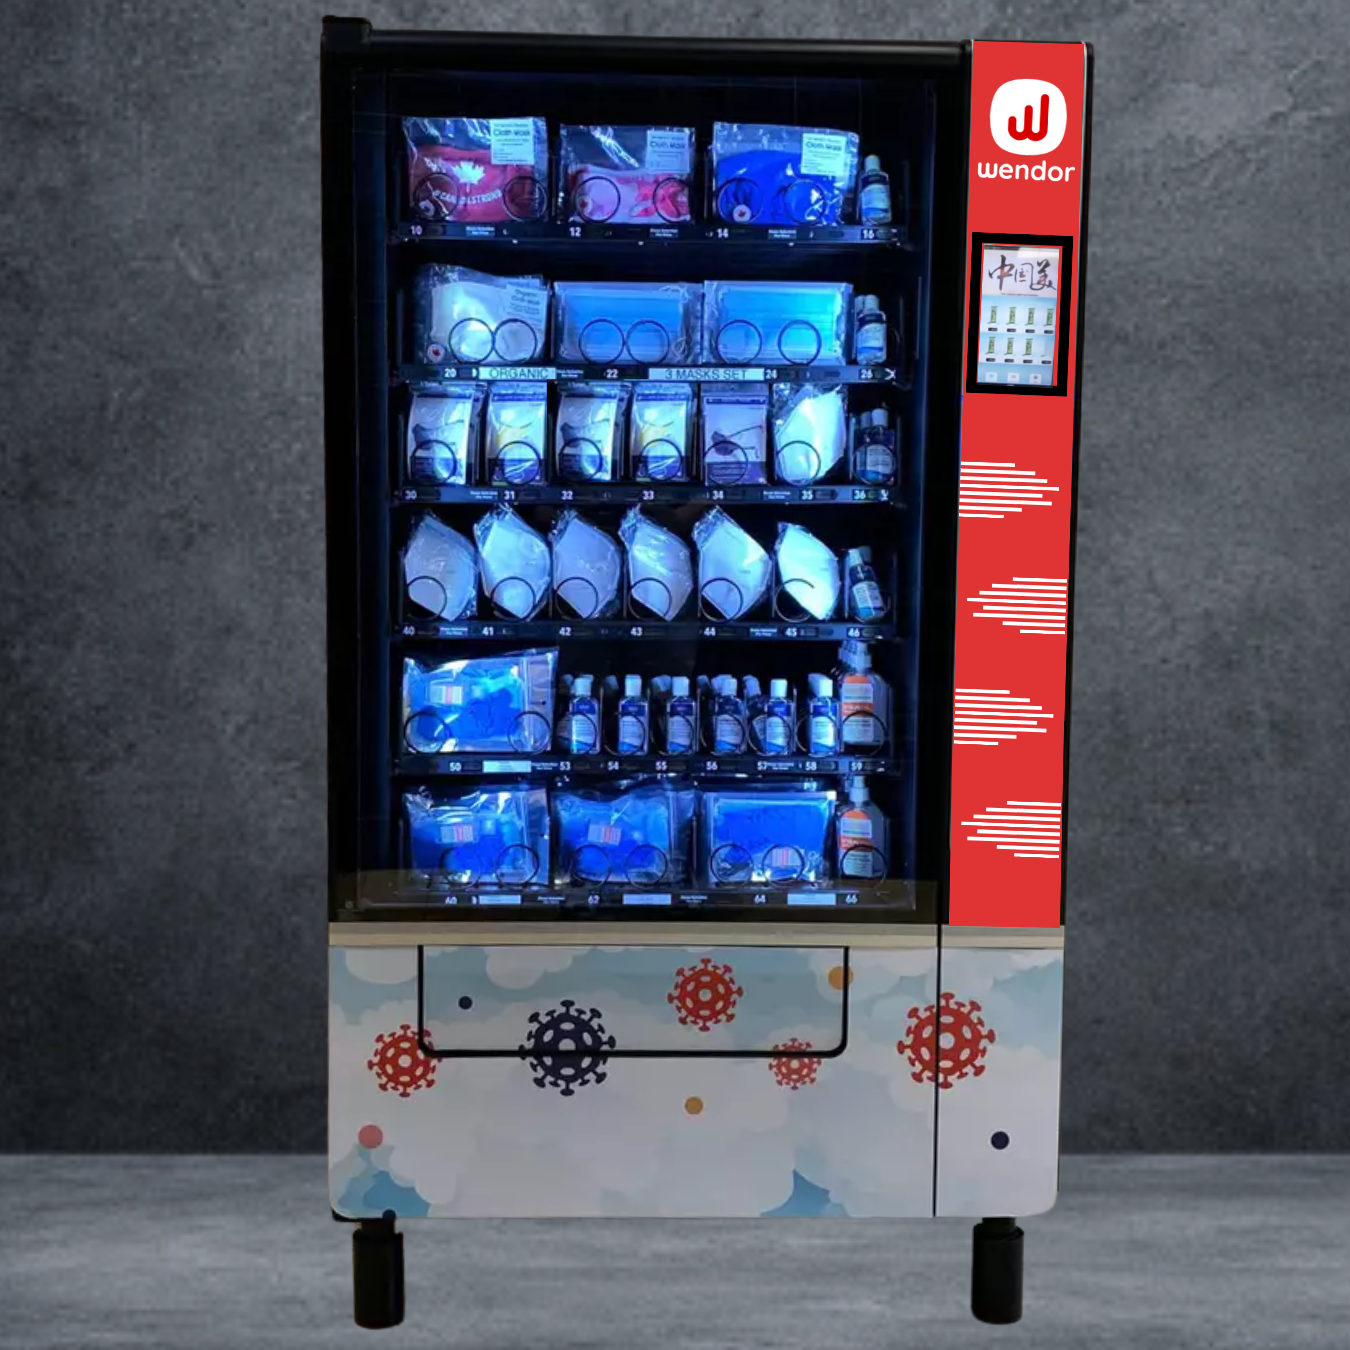 Wendor Titan - All Purpose Vending Machine